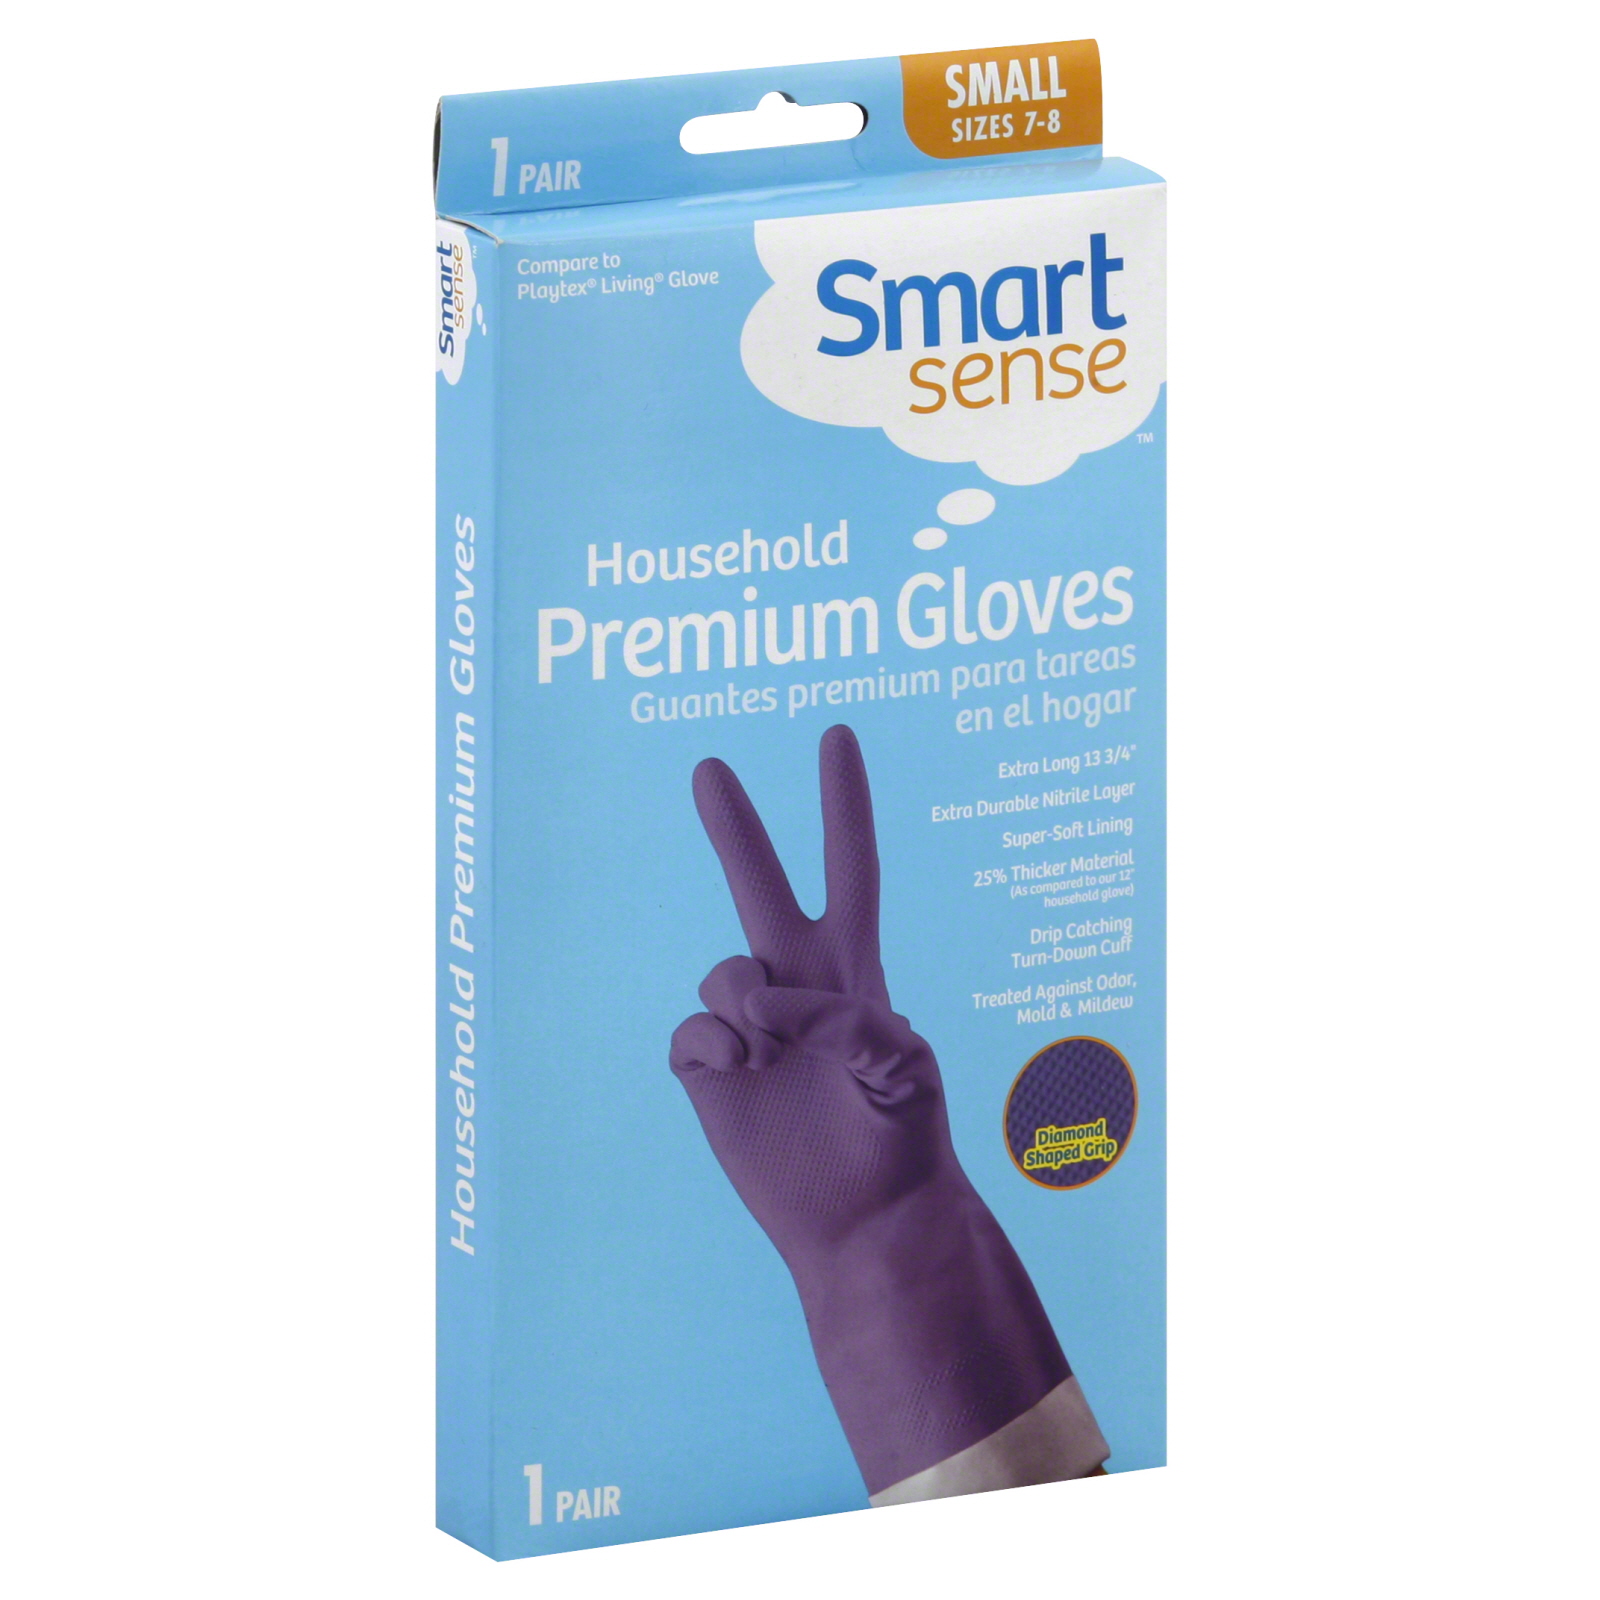 Smart Sense Gloves, Premium, Household, Small (Sizes 7-8) 1 pair